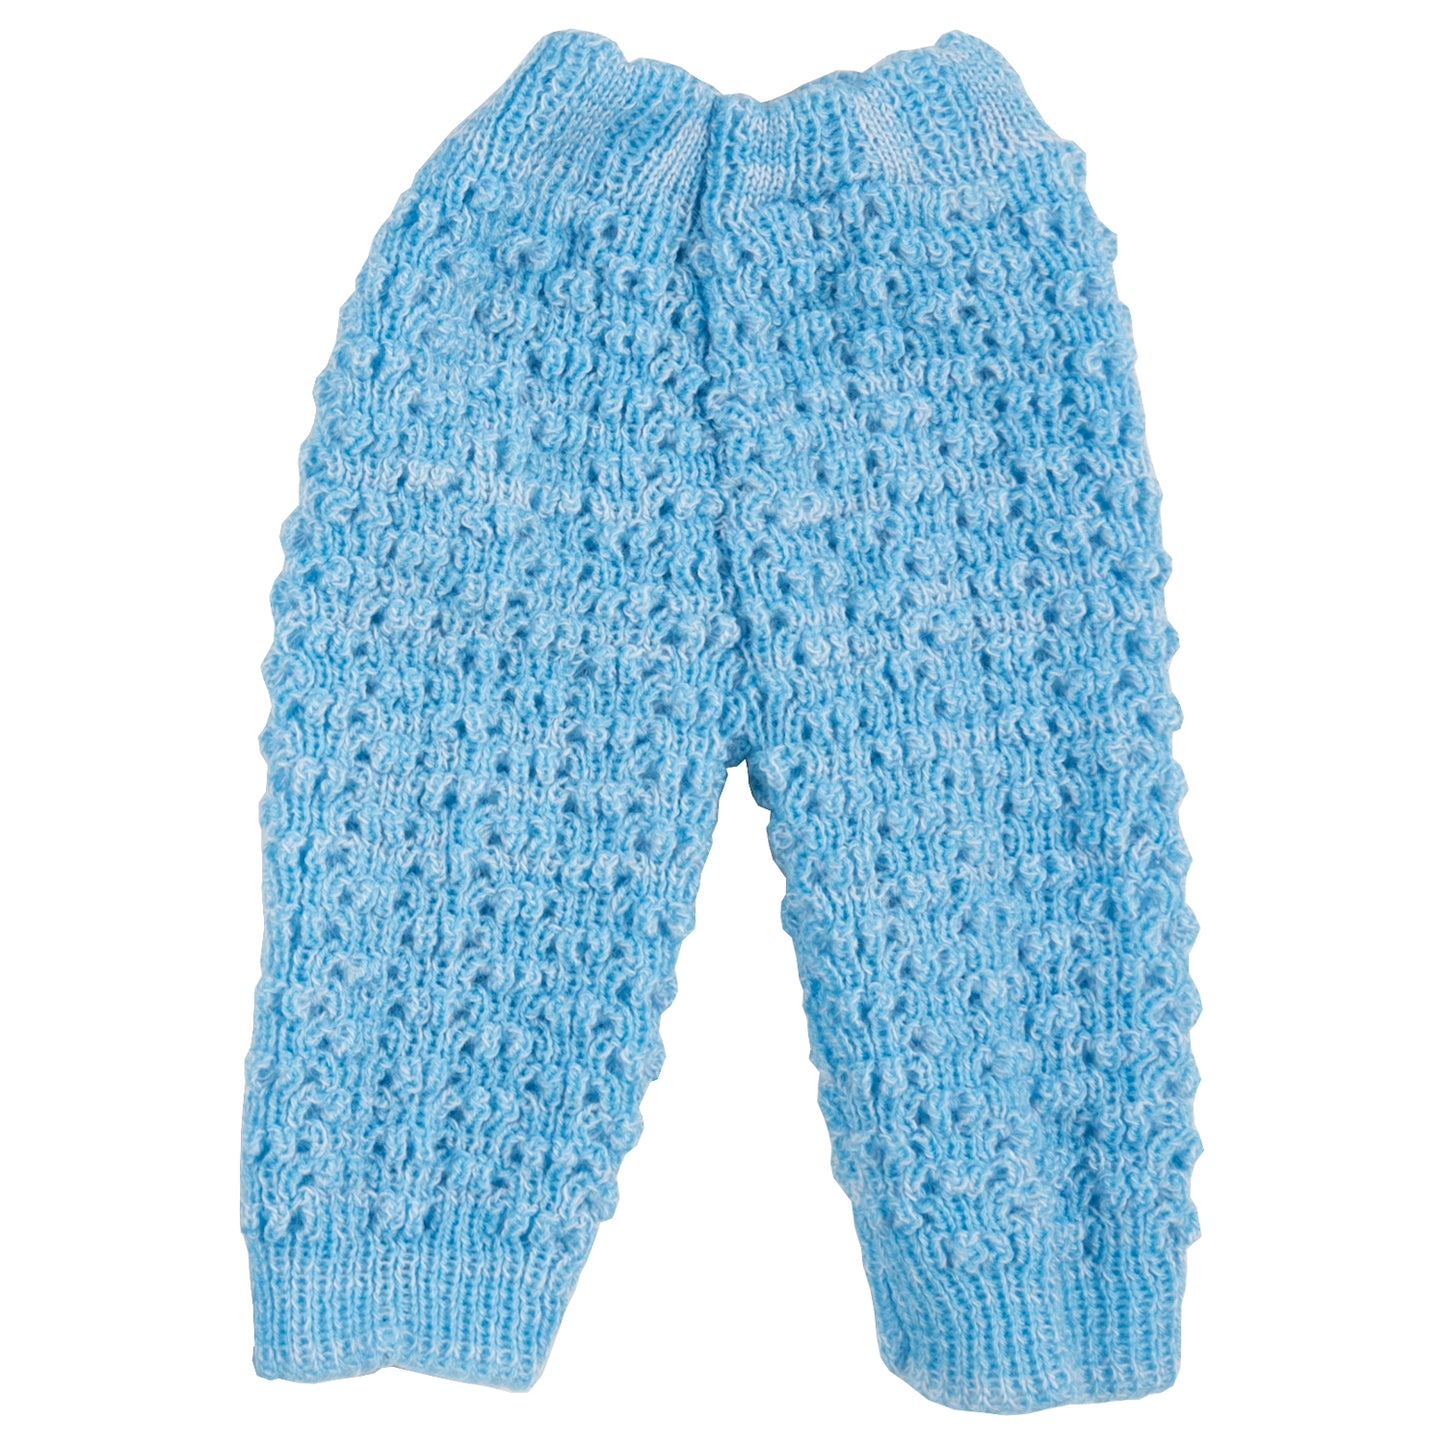 Set Newborn Crochet Blanket Five Piece Set Sweater Pants Hat Mittens